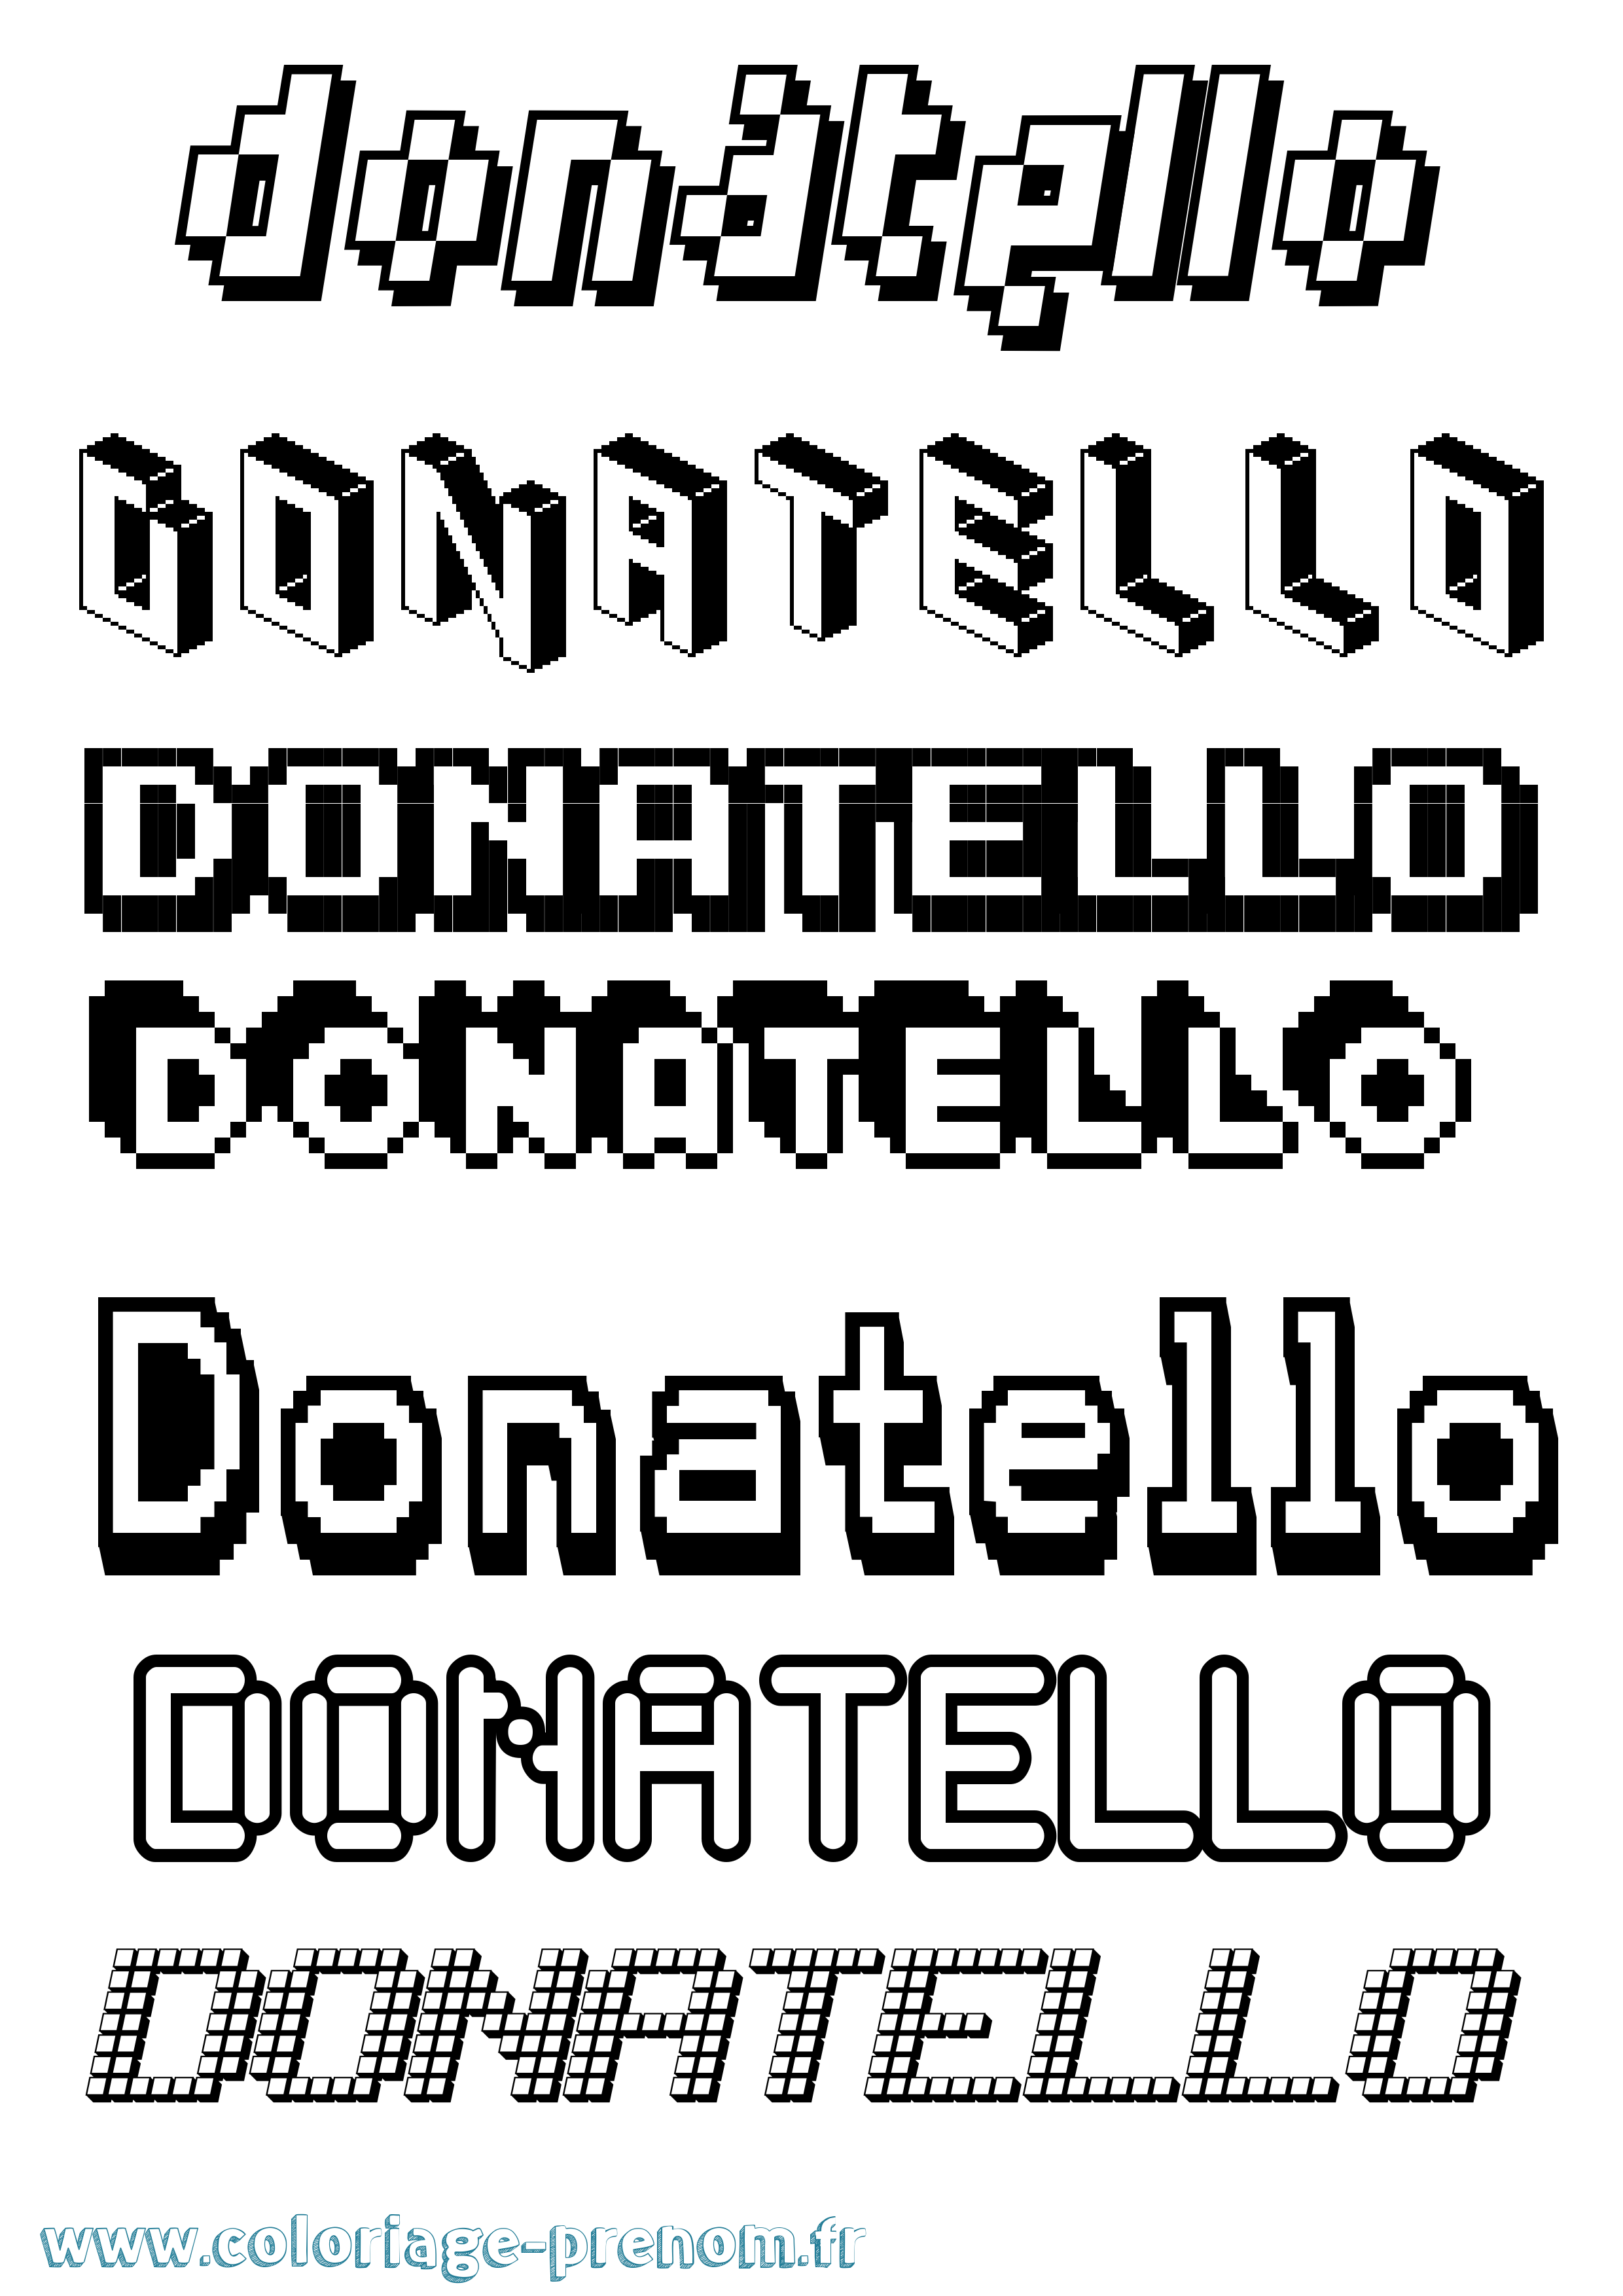 Coloriage prénom Donatello Pixel